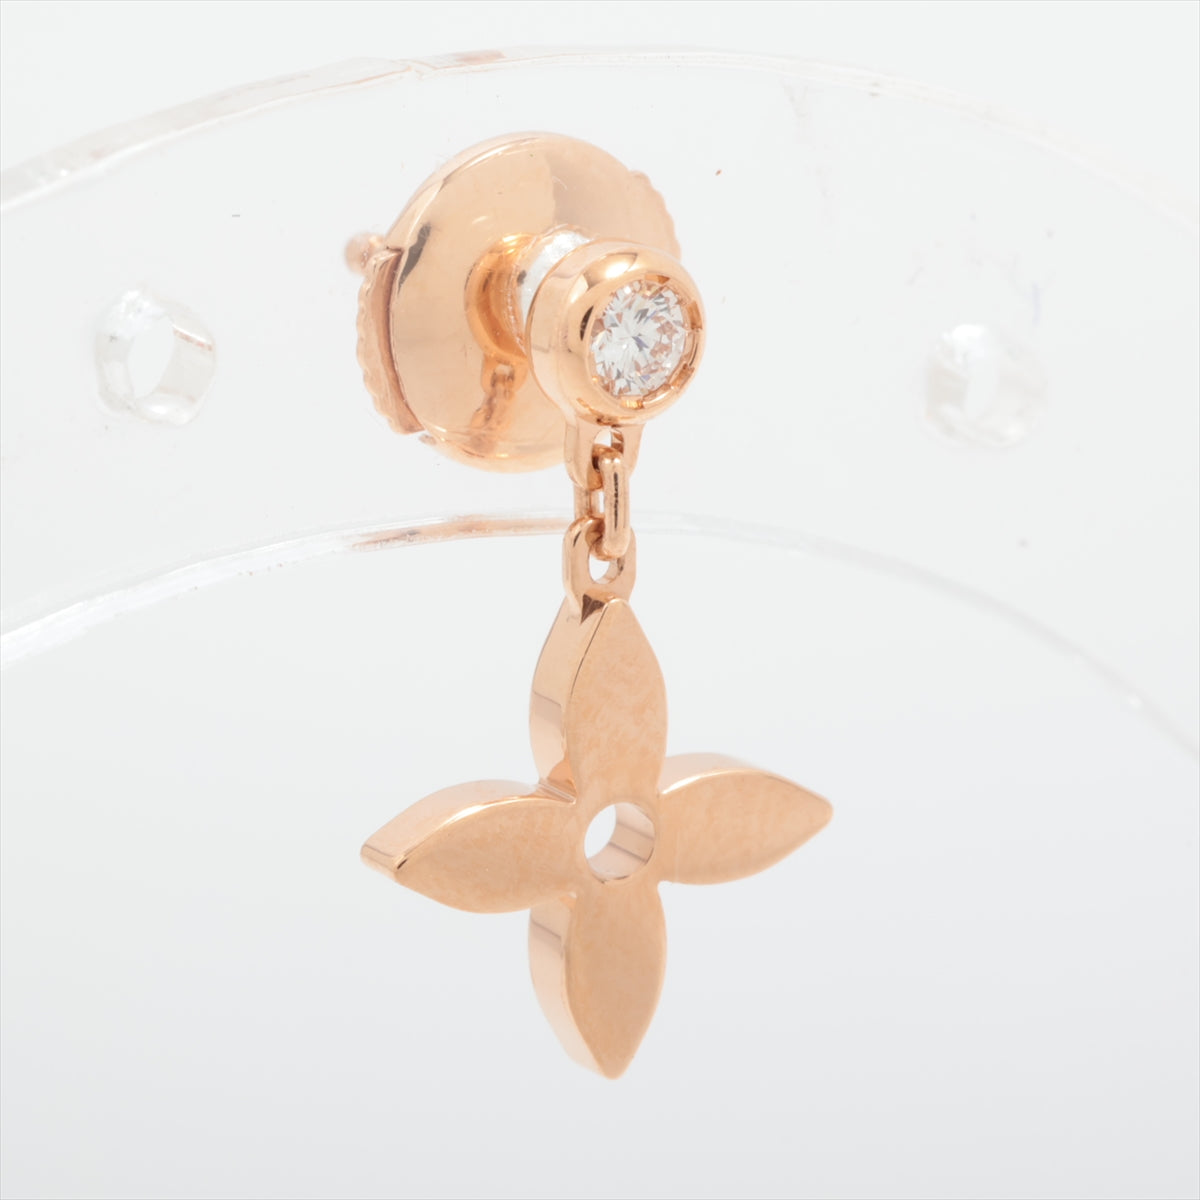 Louis Vuitton Puz Monogram Idylle diamond single earring 750(PG) 1.1g Q96169